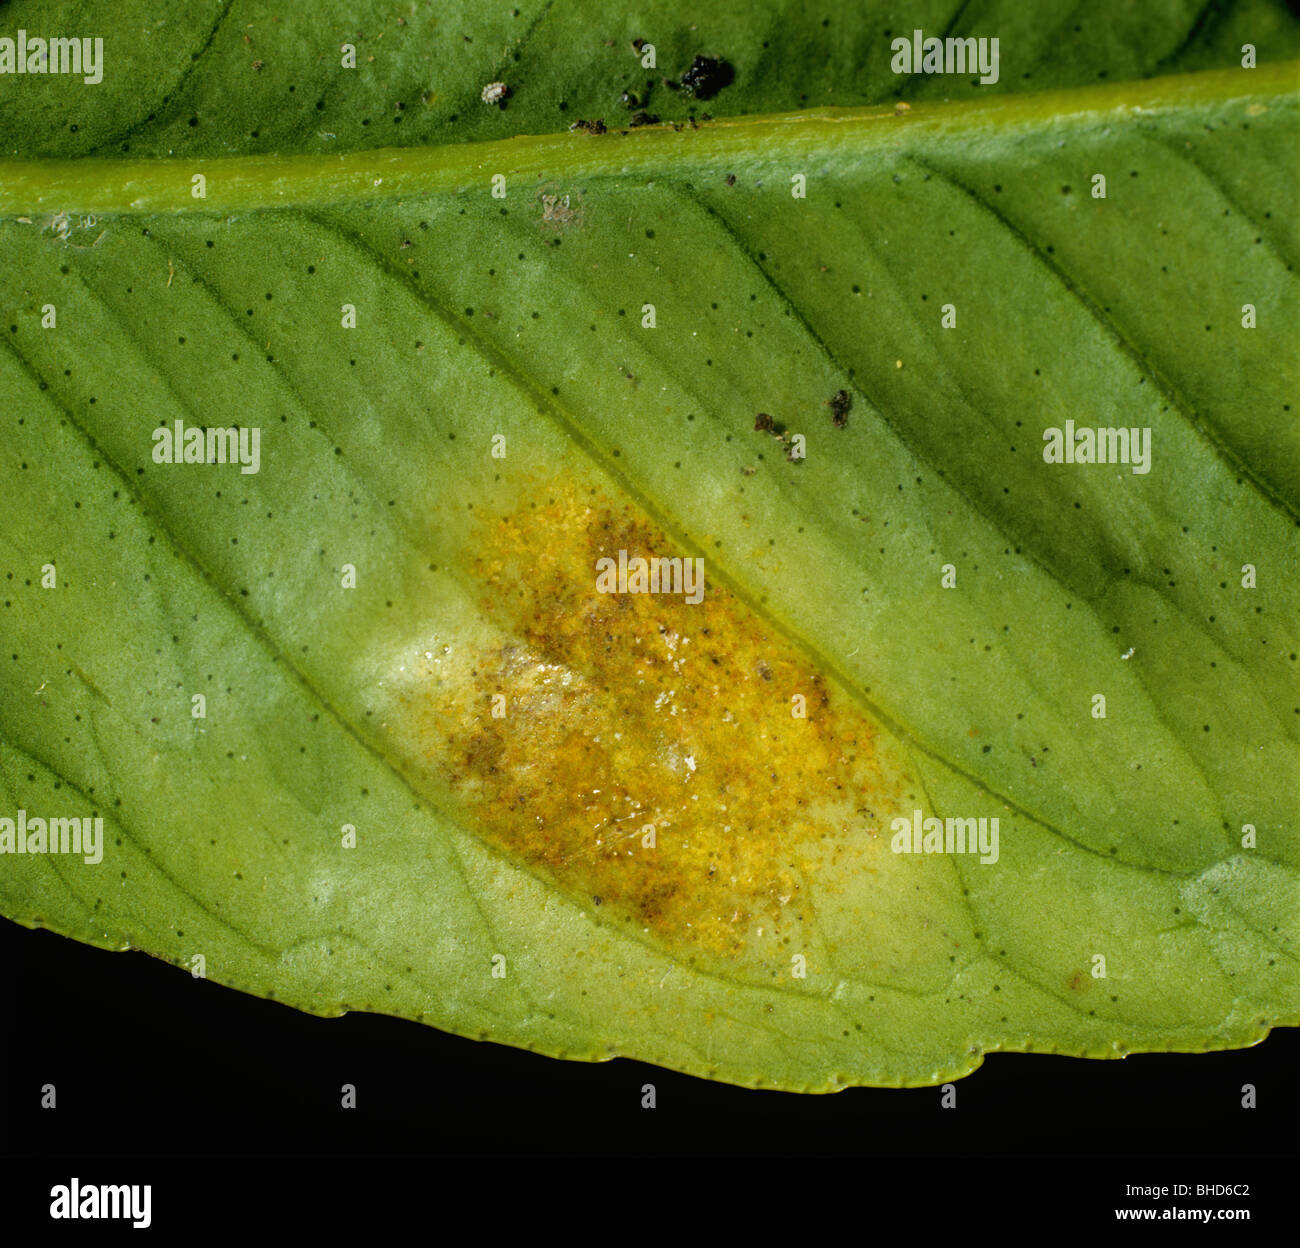 Citrus rust mite (Phyllocoptruta oleivora) rust like patches of damage on a lemon leaf Stock Photo